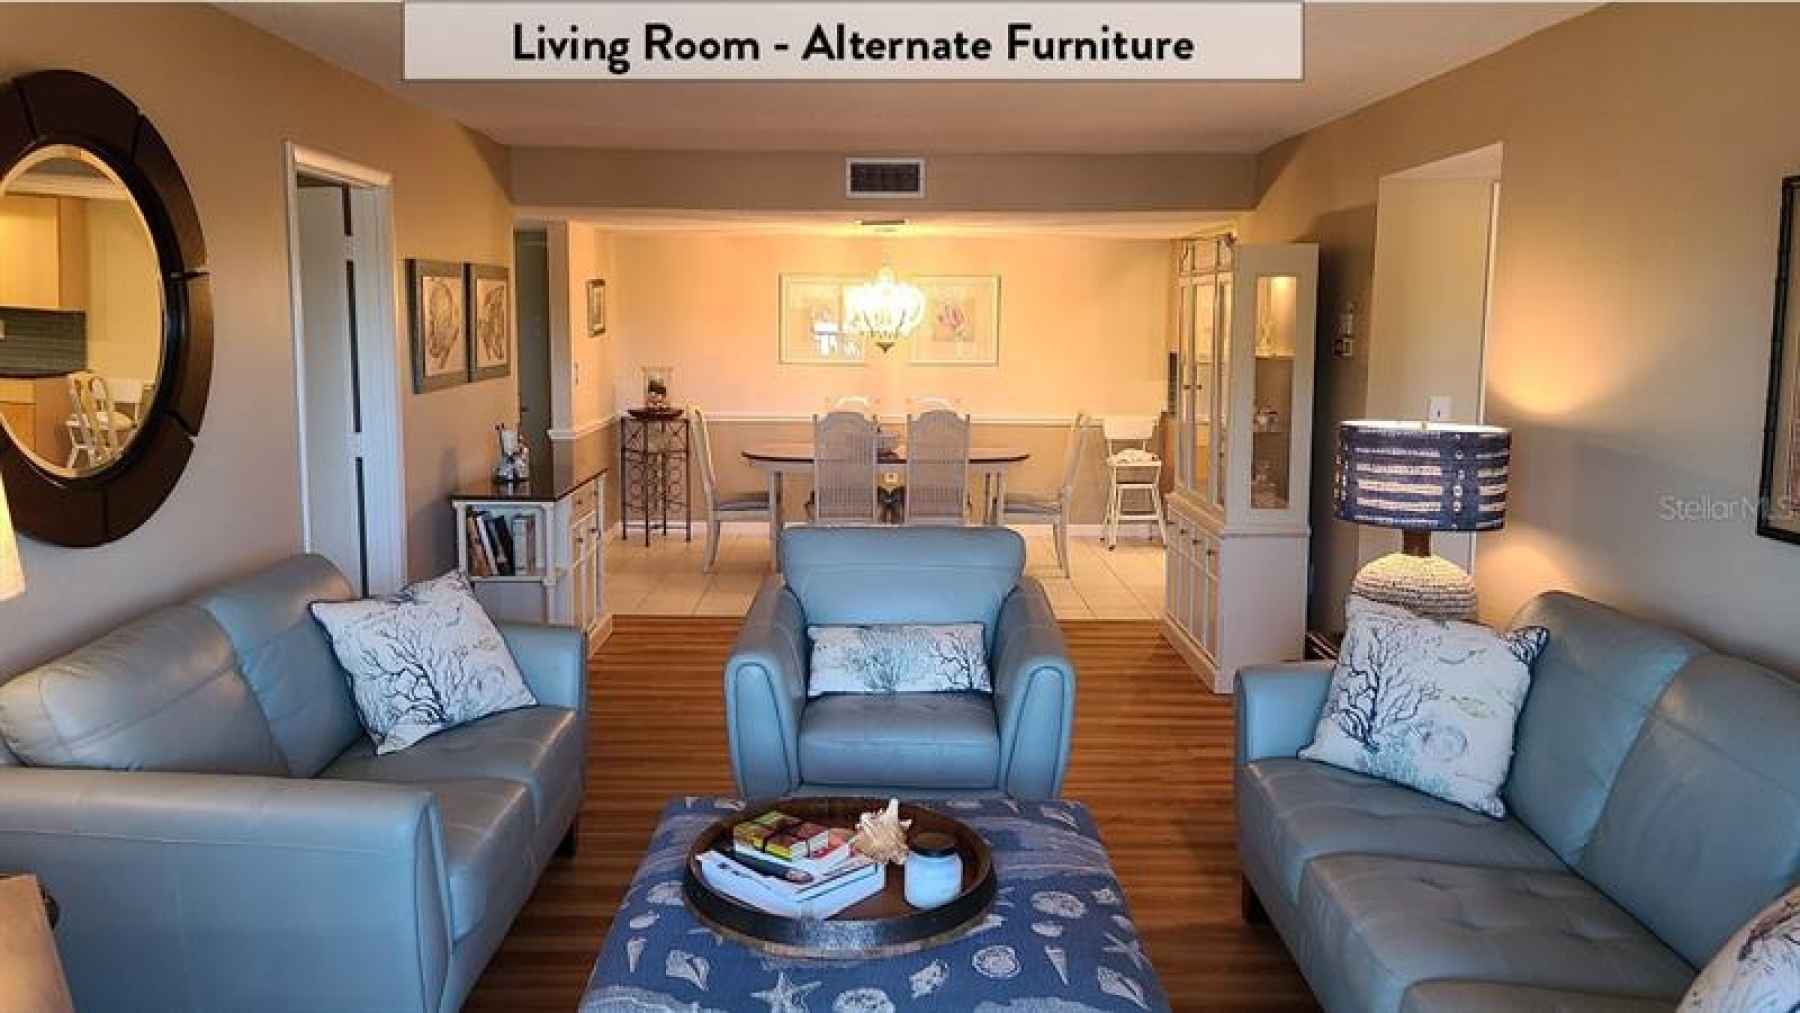 Living Room - Alternate Furniture